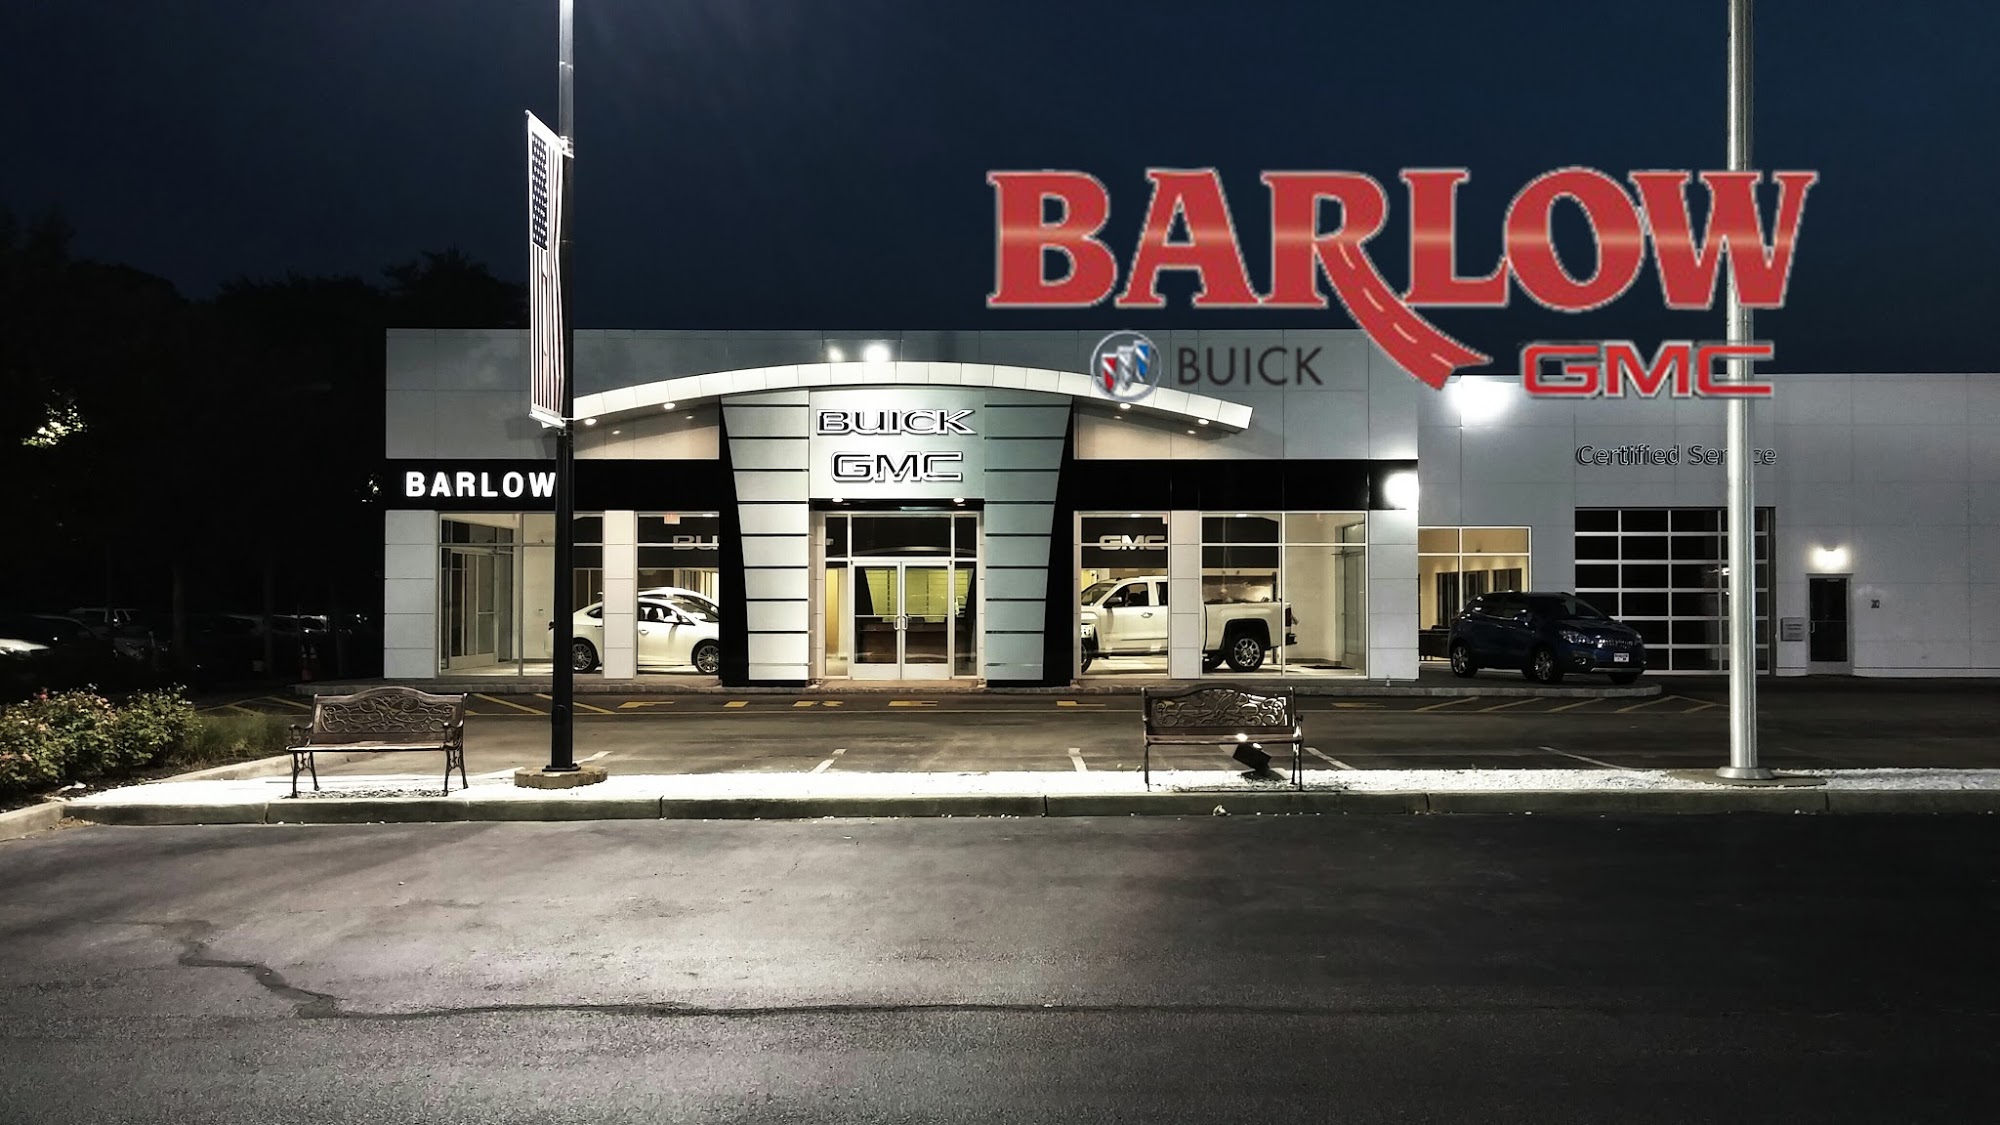 Barlow Buick GMC